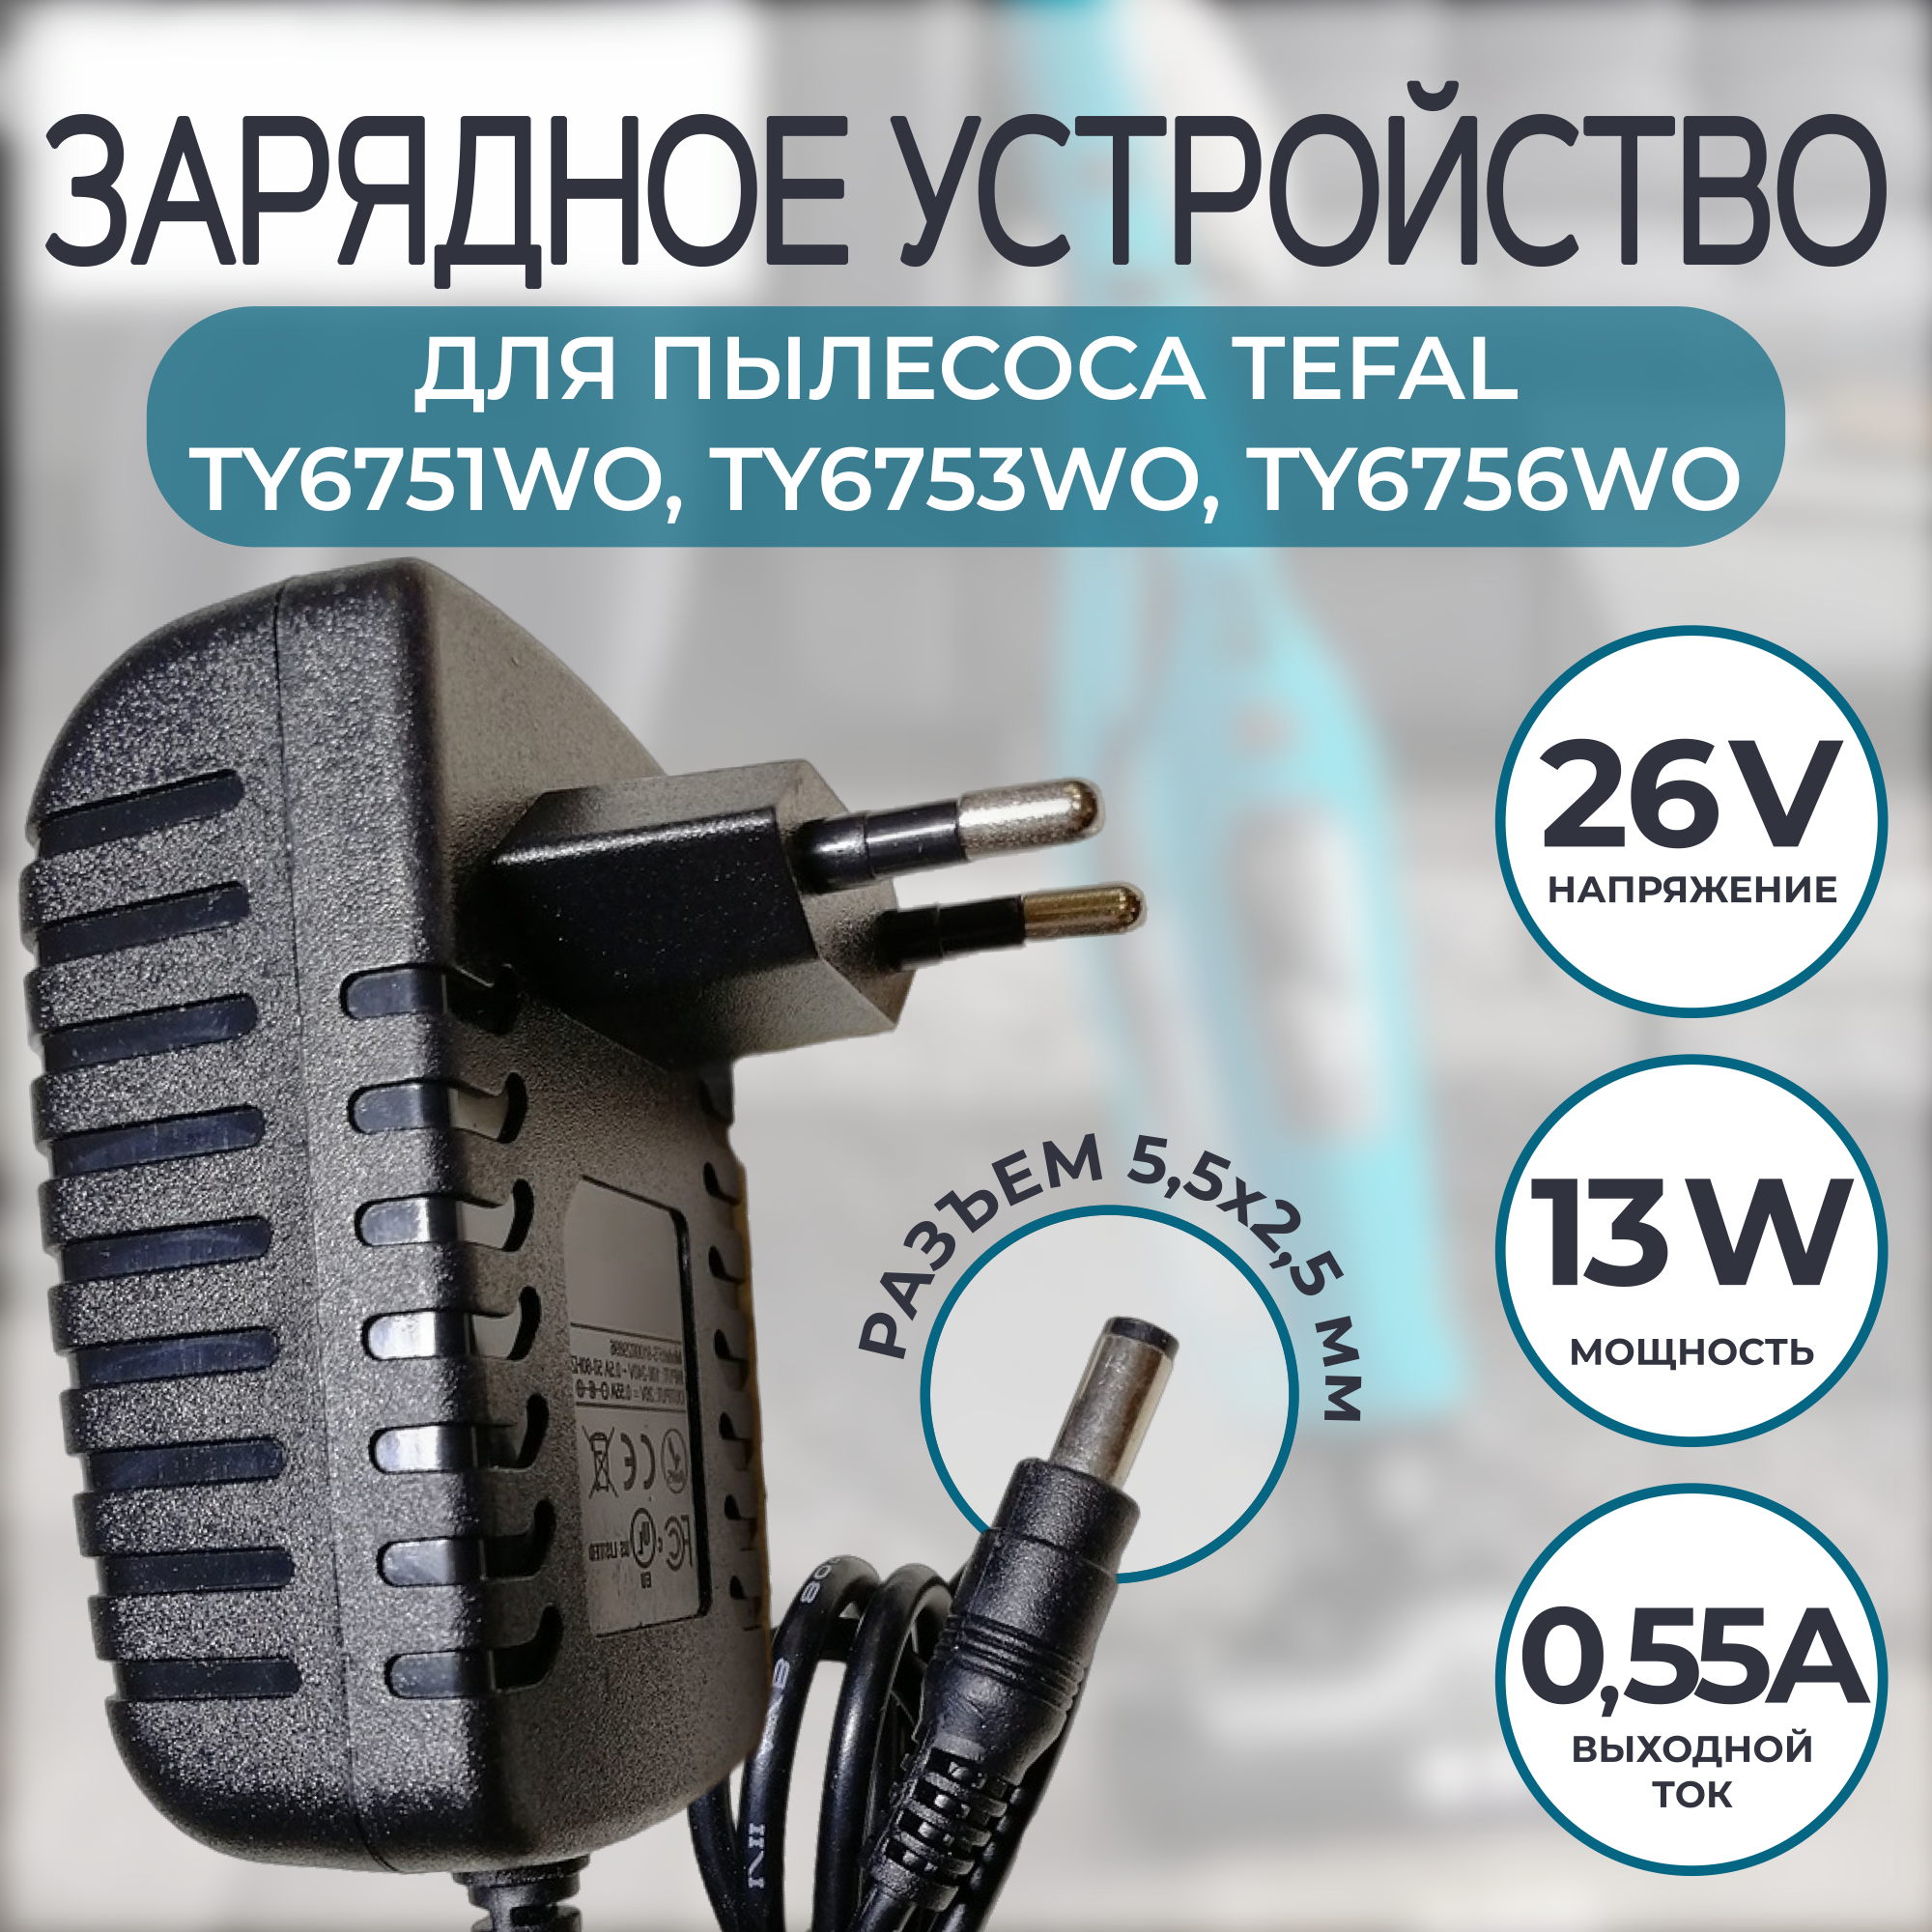 Адаптер зарядка (блок) питания 26V0.5A - 0.55A 5.5mm x 2.5mm для пылесосов Tefal Rowenta OBH Nordica Trikli.